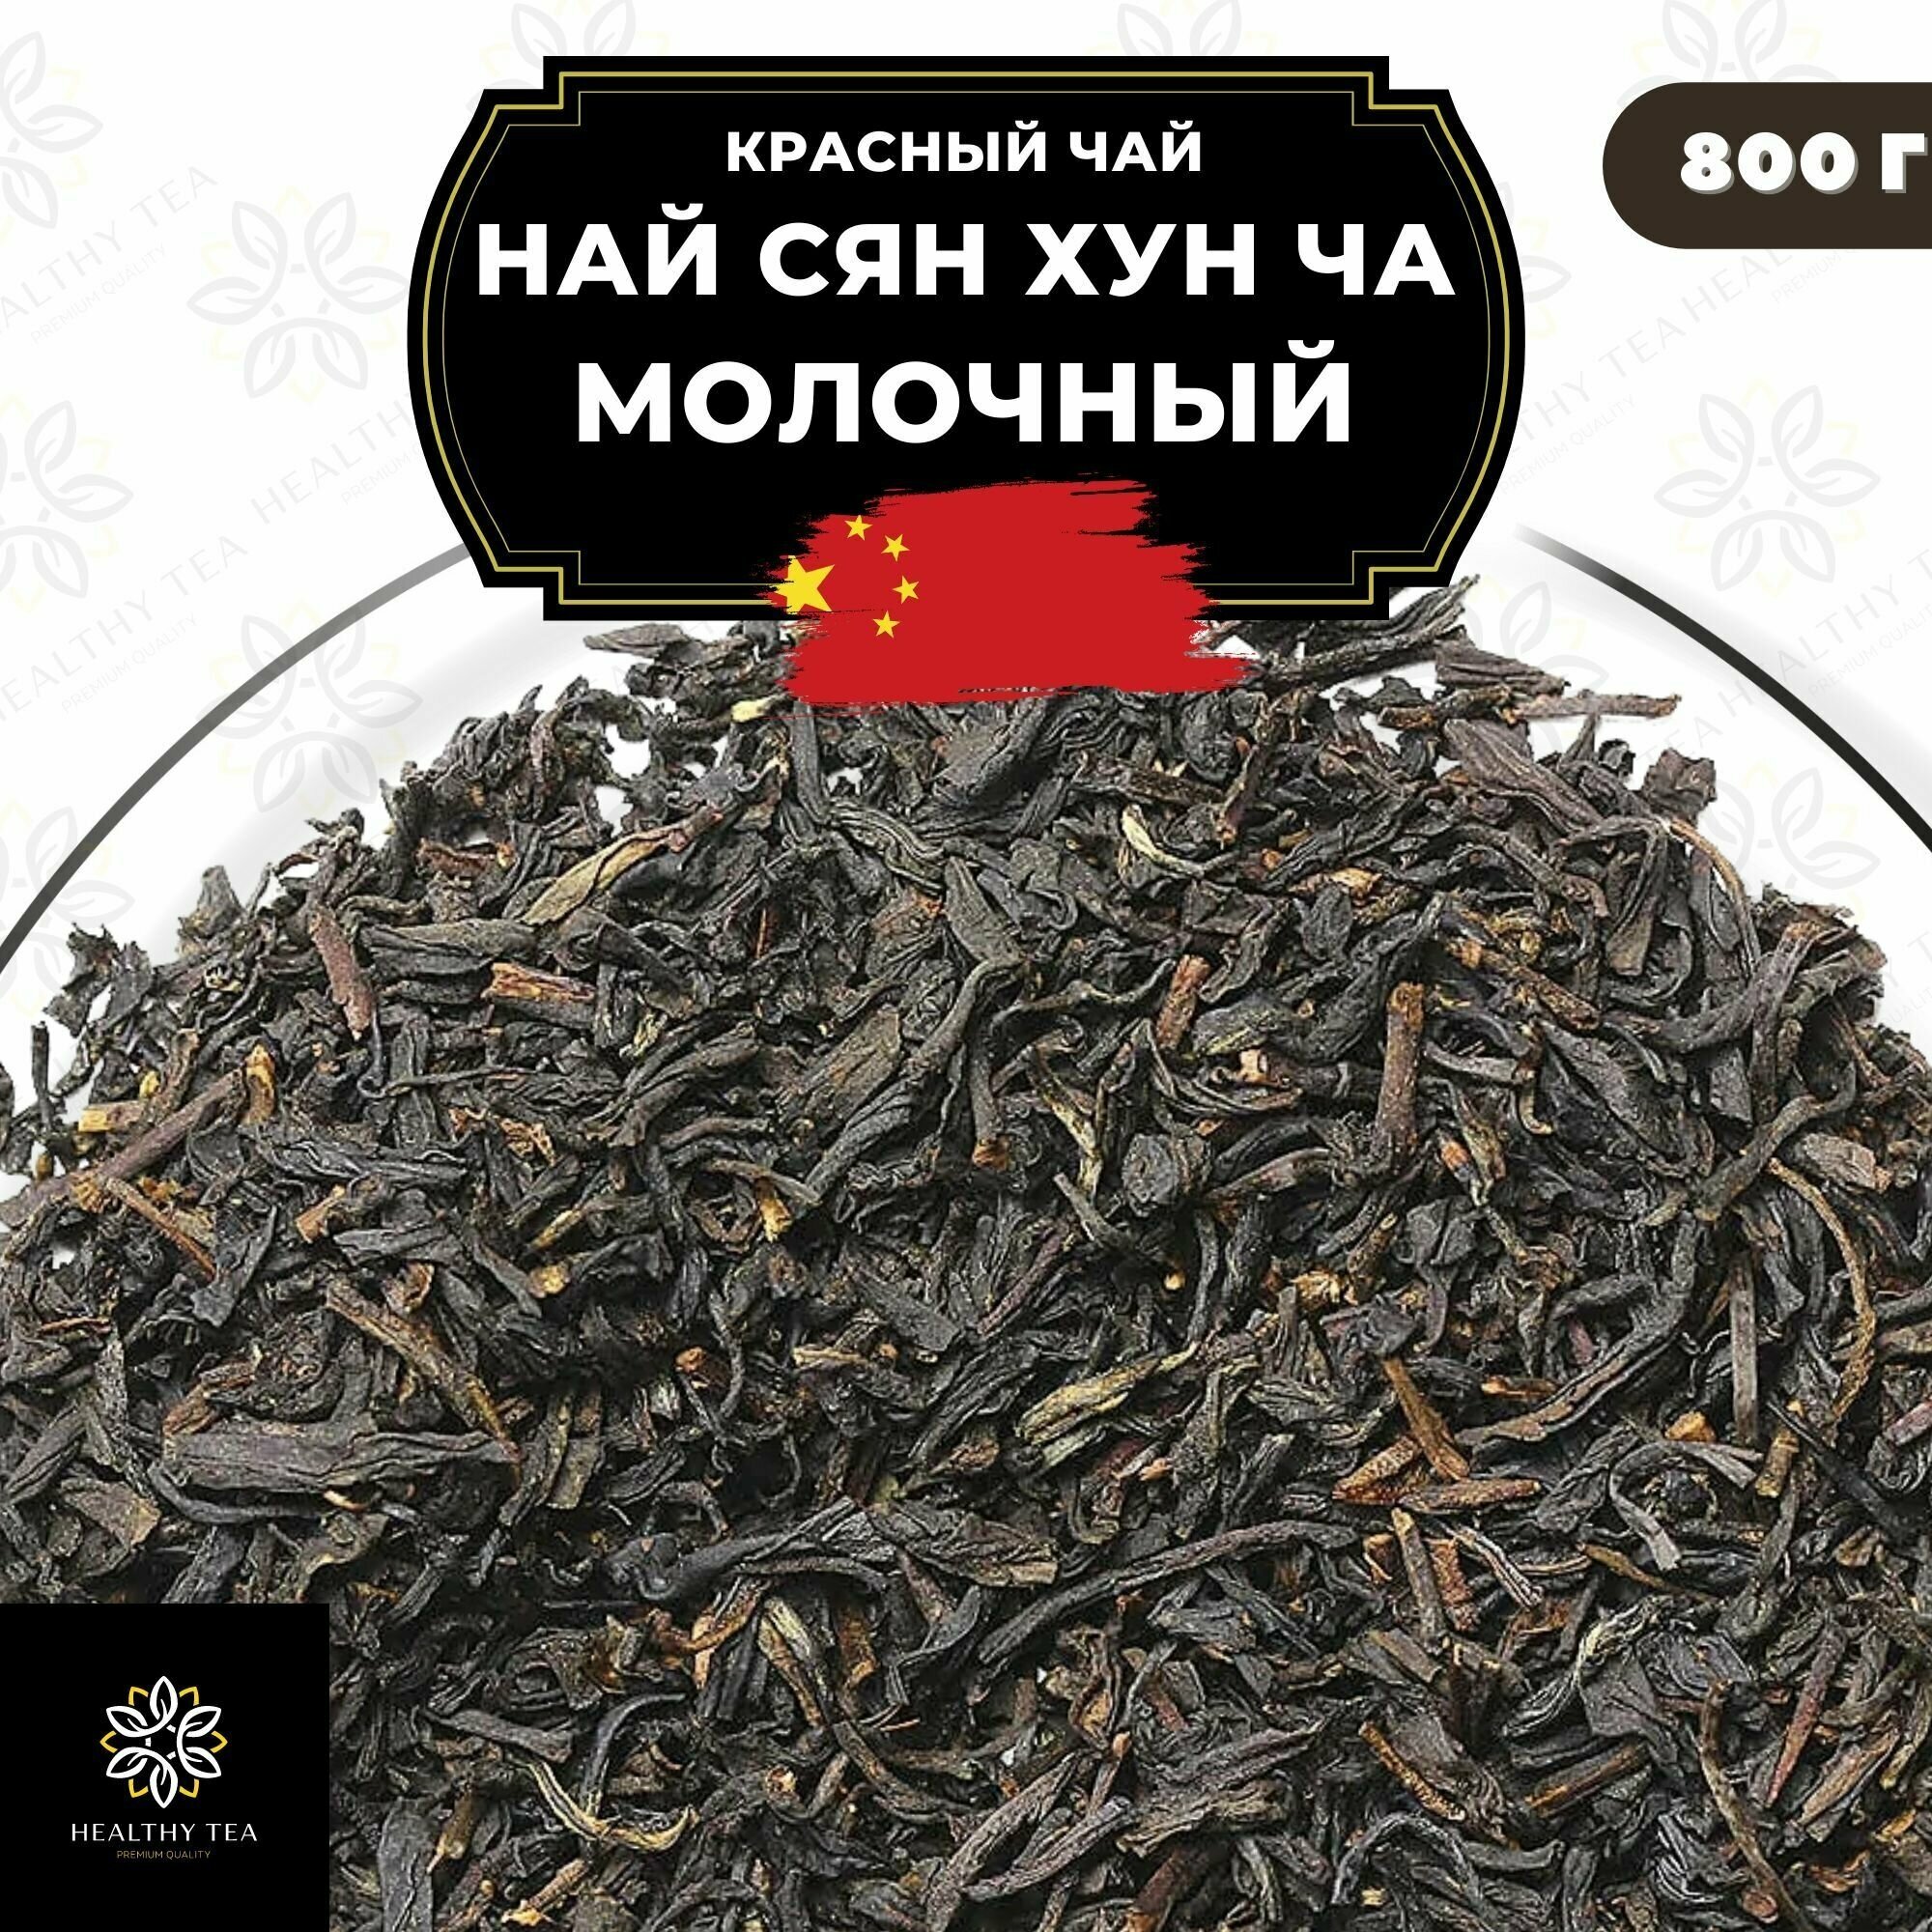 Китайский красный чай Най Сян Хун Ча (Молочный) Полезный чай / HEALTHY TEA, 800 г